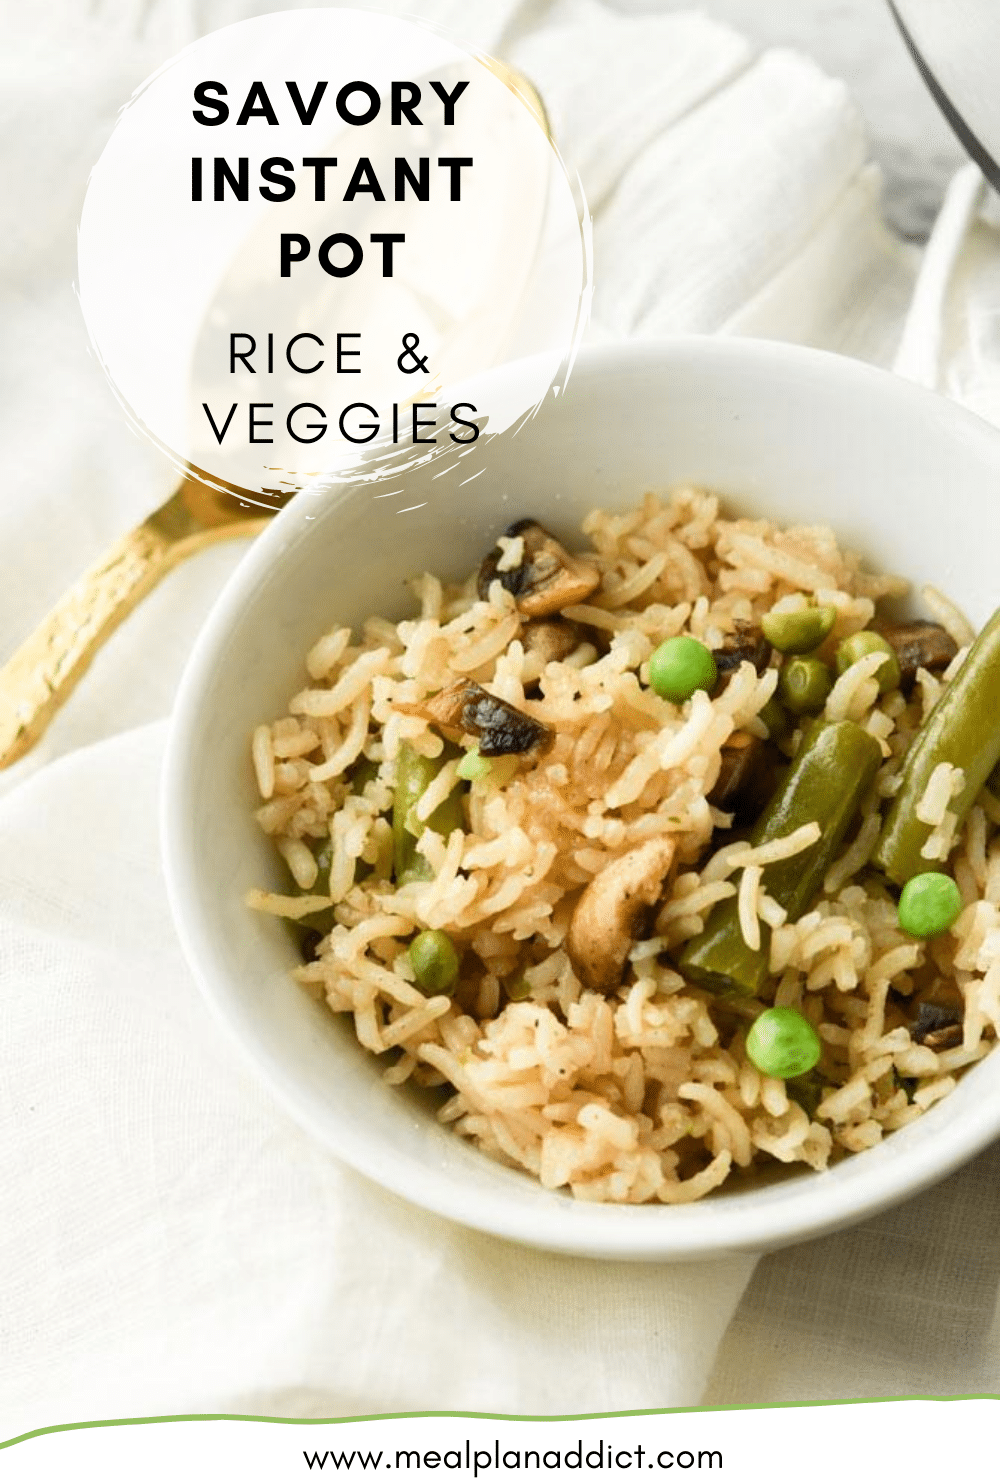 Savory Instant Pot Rice & Veggies